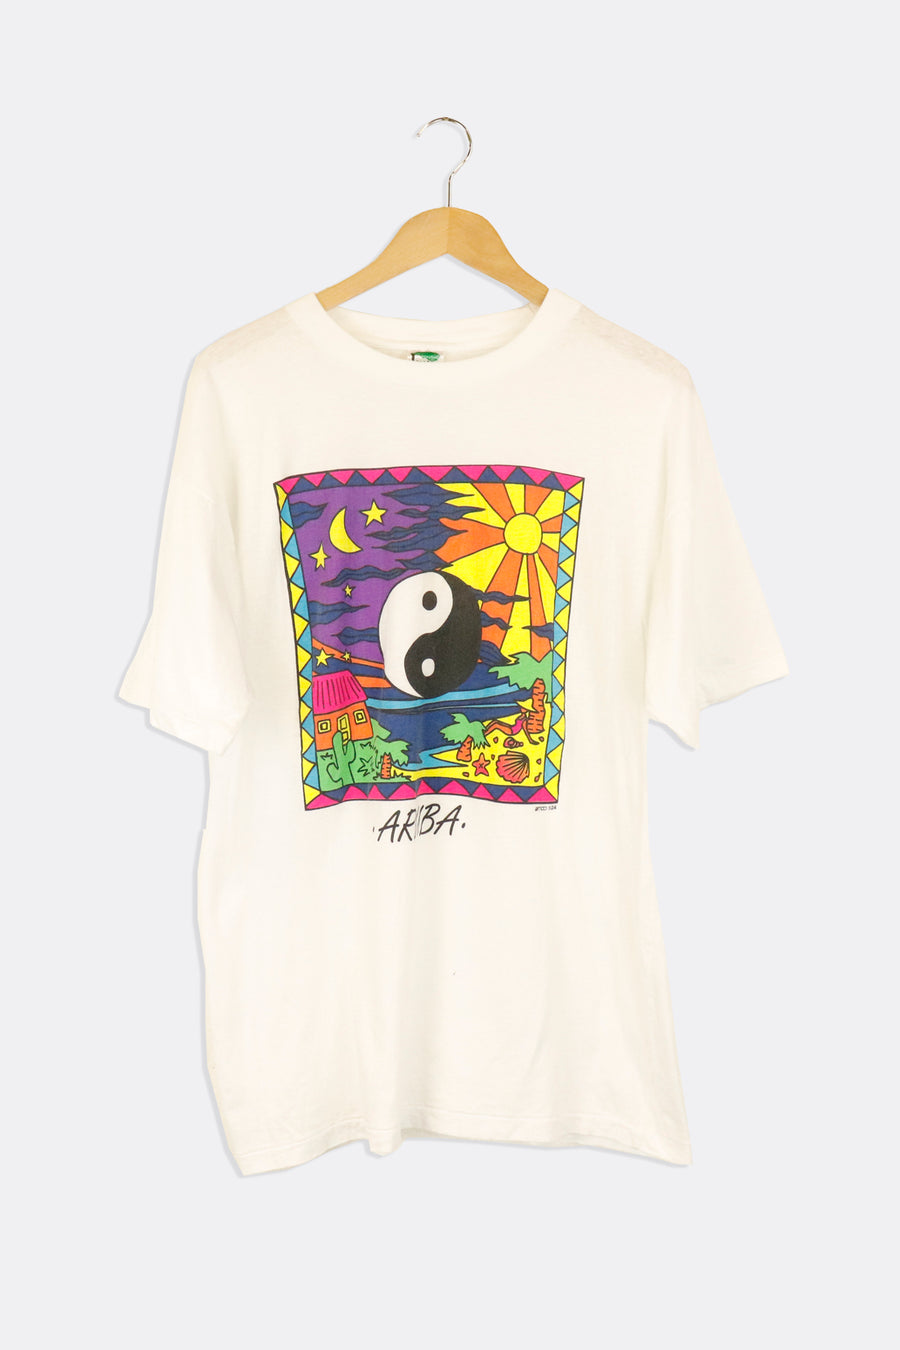 Vintage Aruba Colourful Ying Yang Cartoon Vinyl T Shirt Sz XL